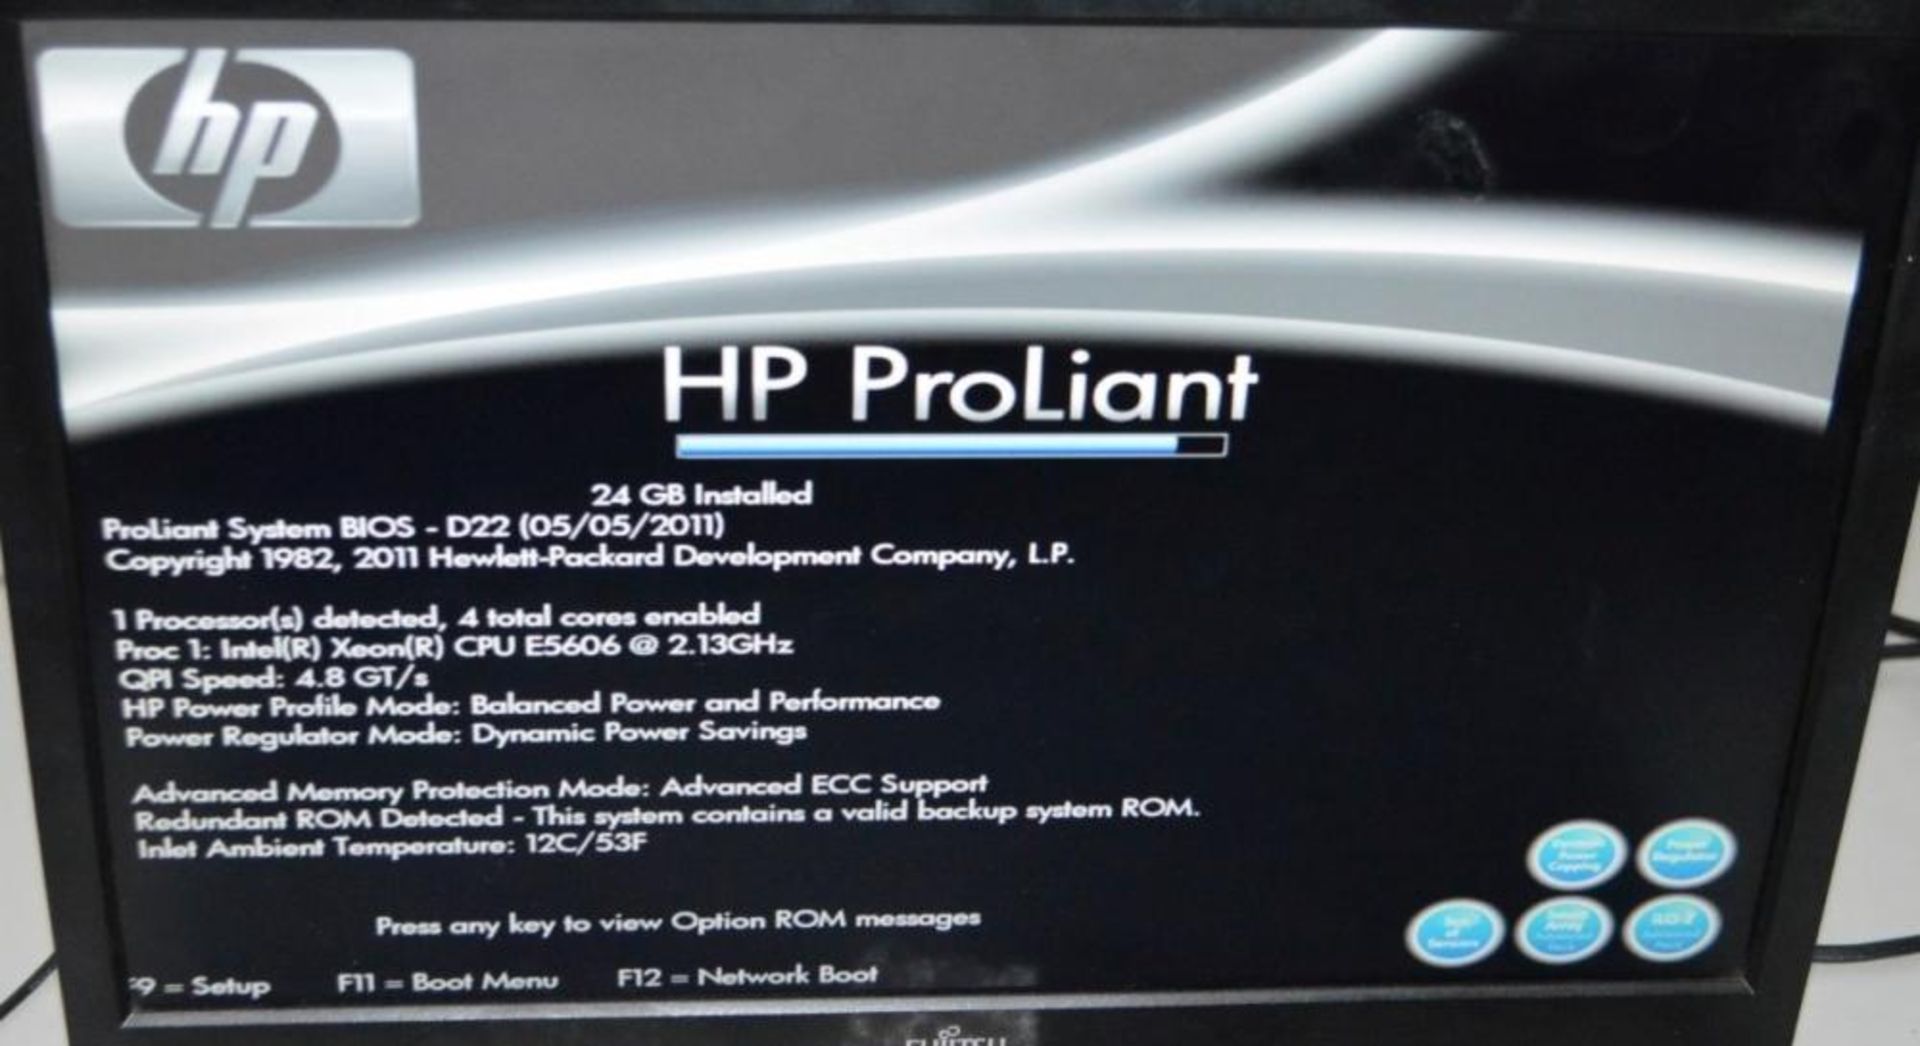 1 x HP Proliant ML350 G6 Server Intel Xeon E5606 2.13GHz 24GB RAM - Ref TP399 - CL394 - Location: Al - Image 4 of 4